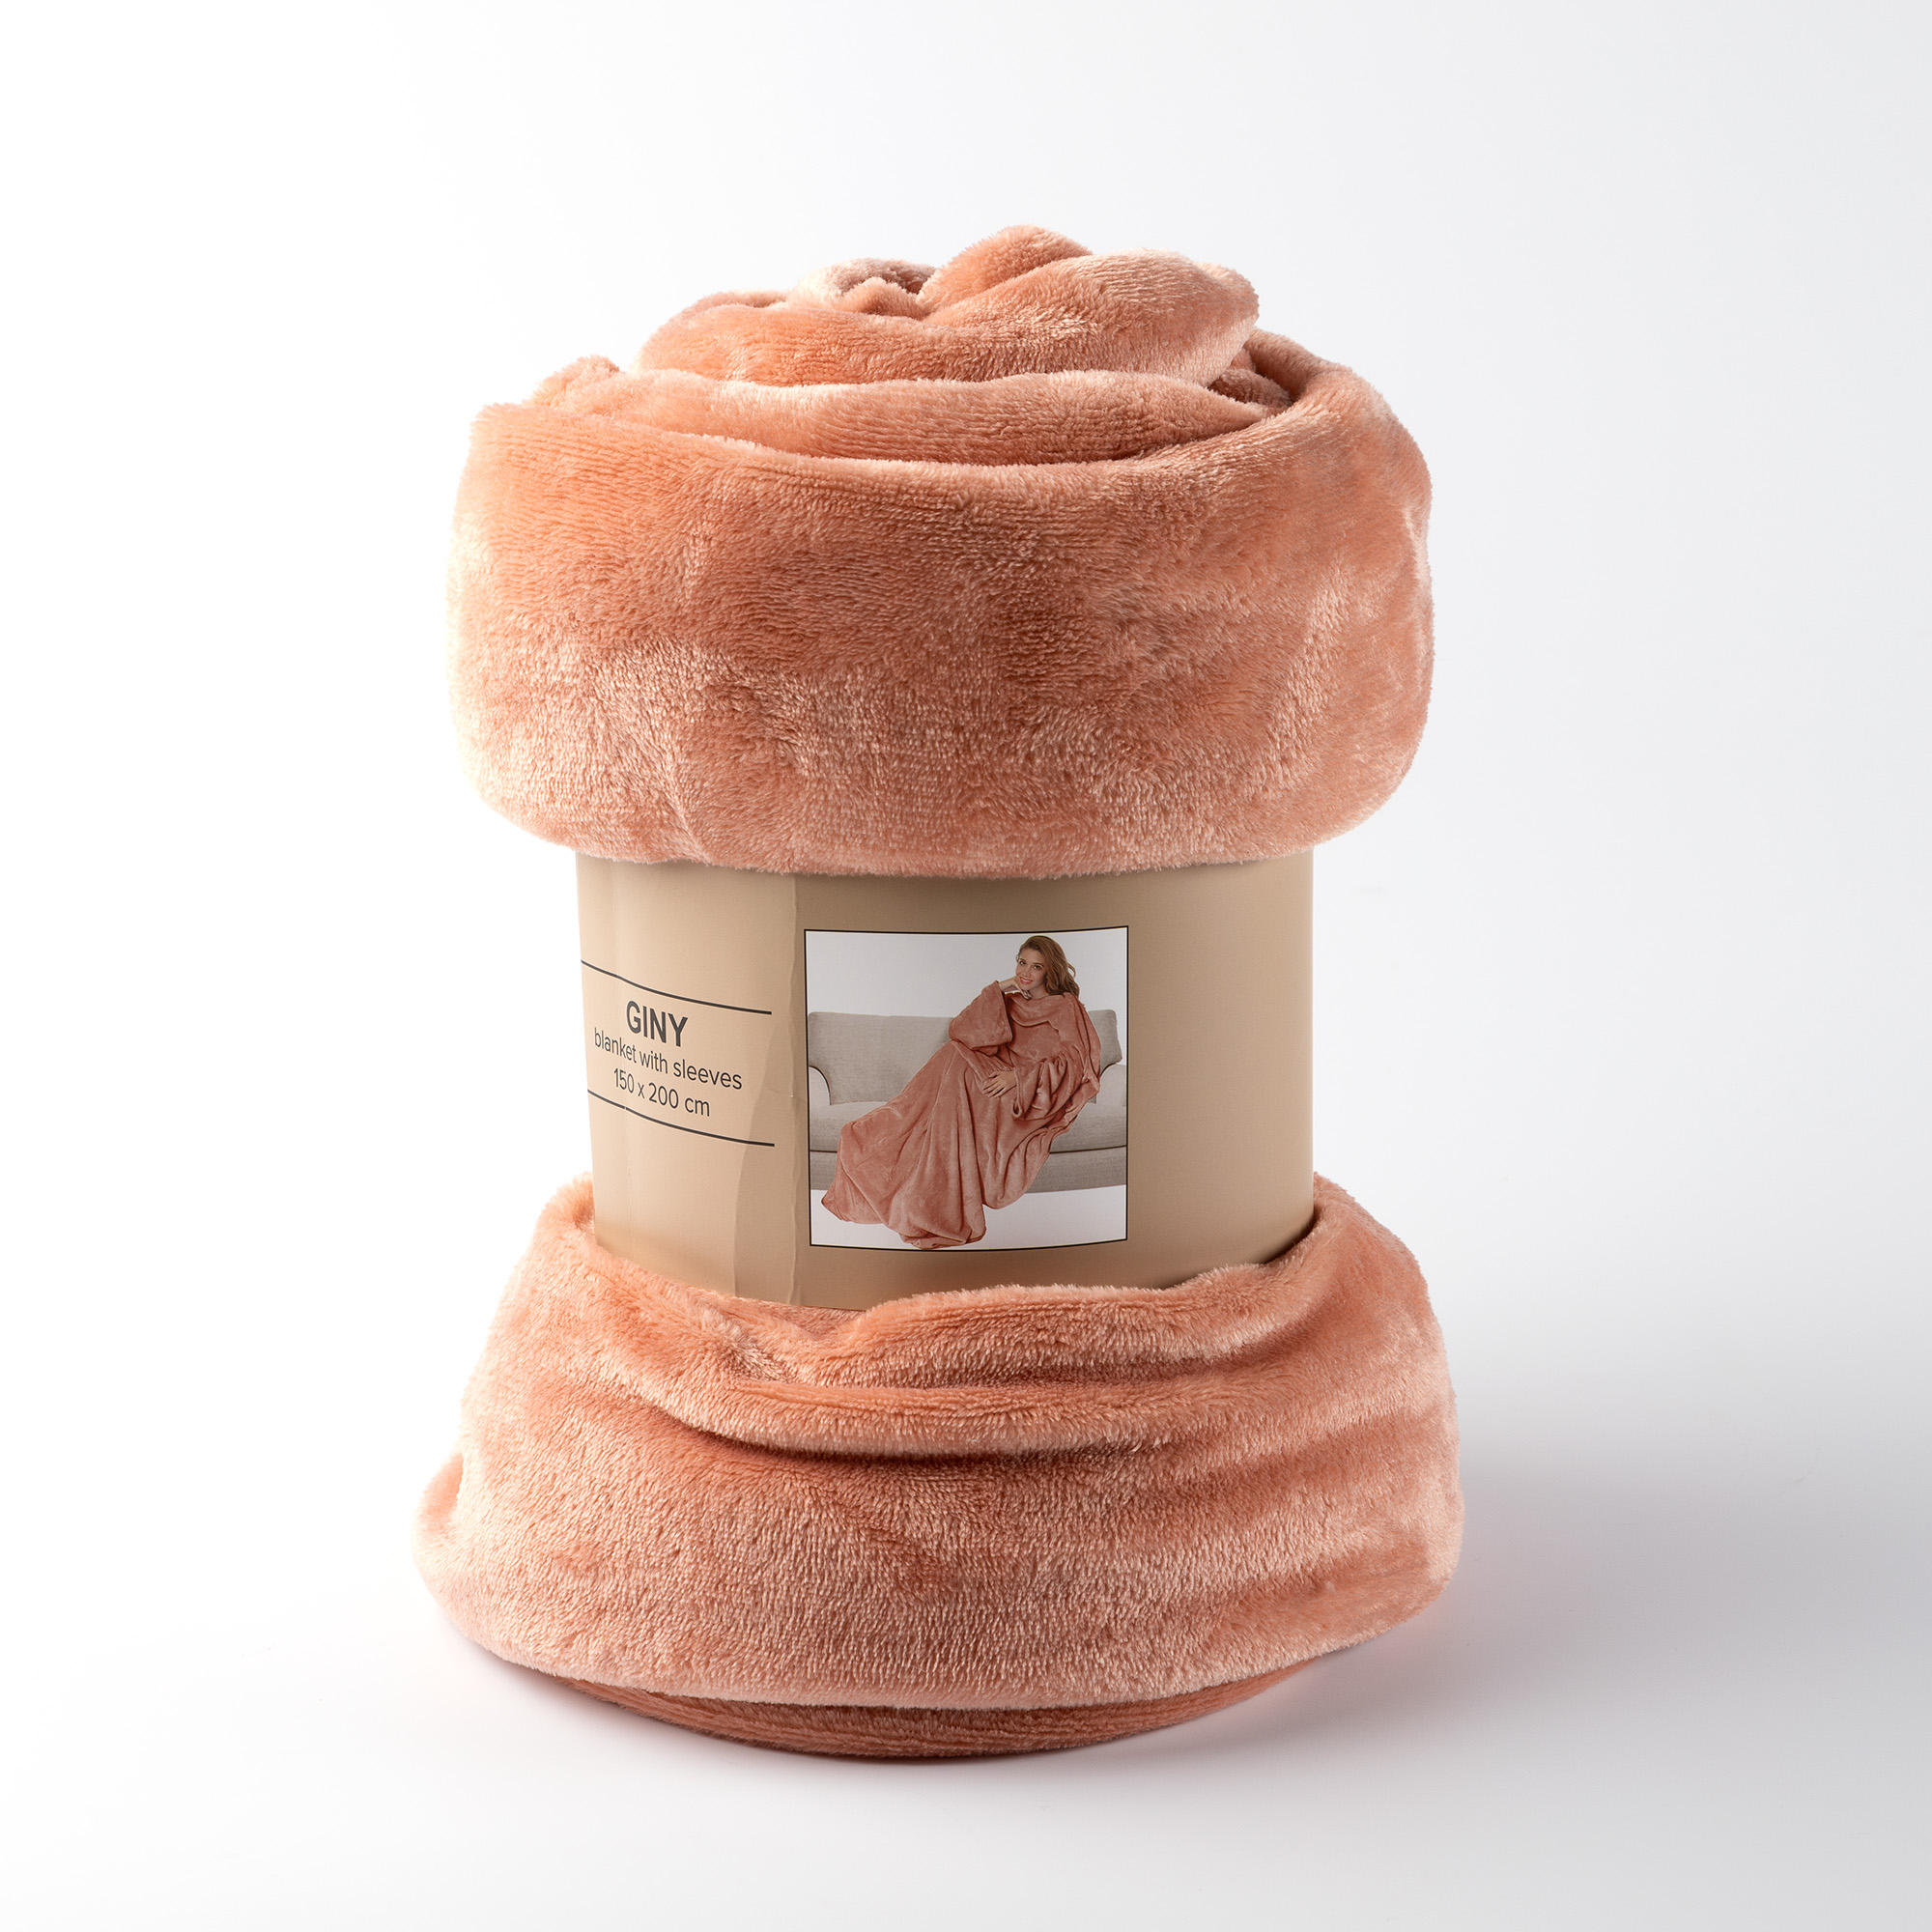  GINY - Plaid mit Ärmeln 150x200 cm - Flannel fleece - Muted Clay - rosa